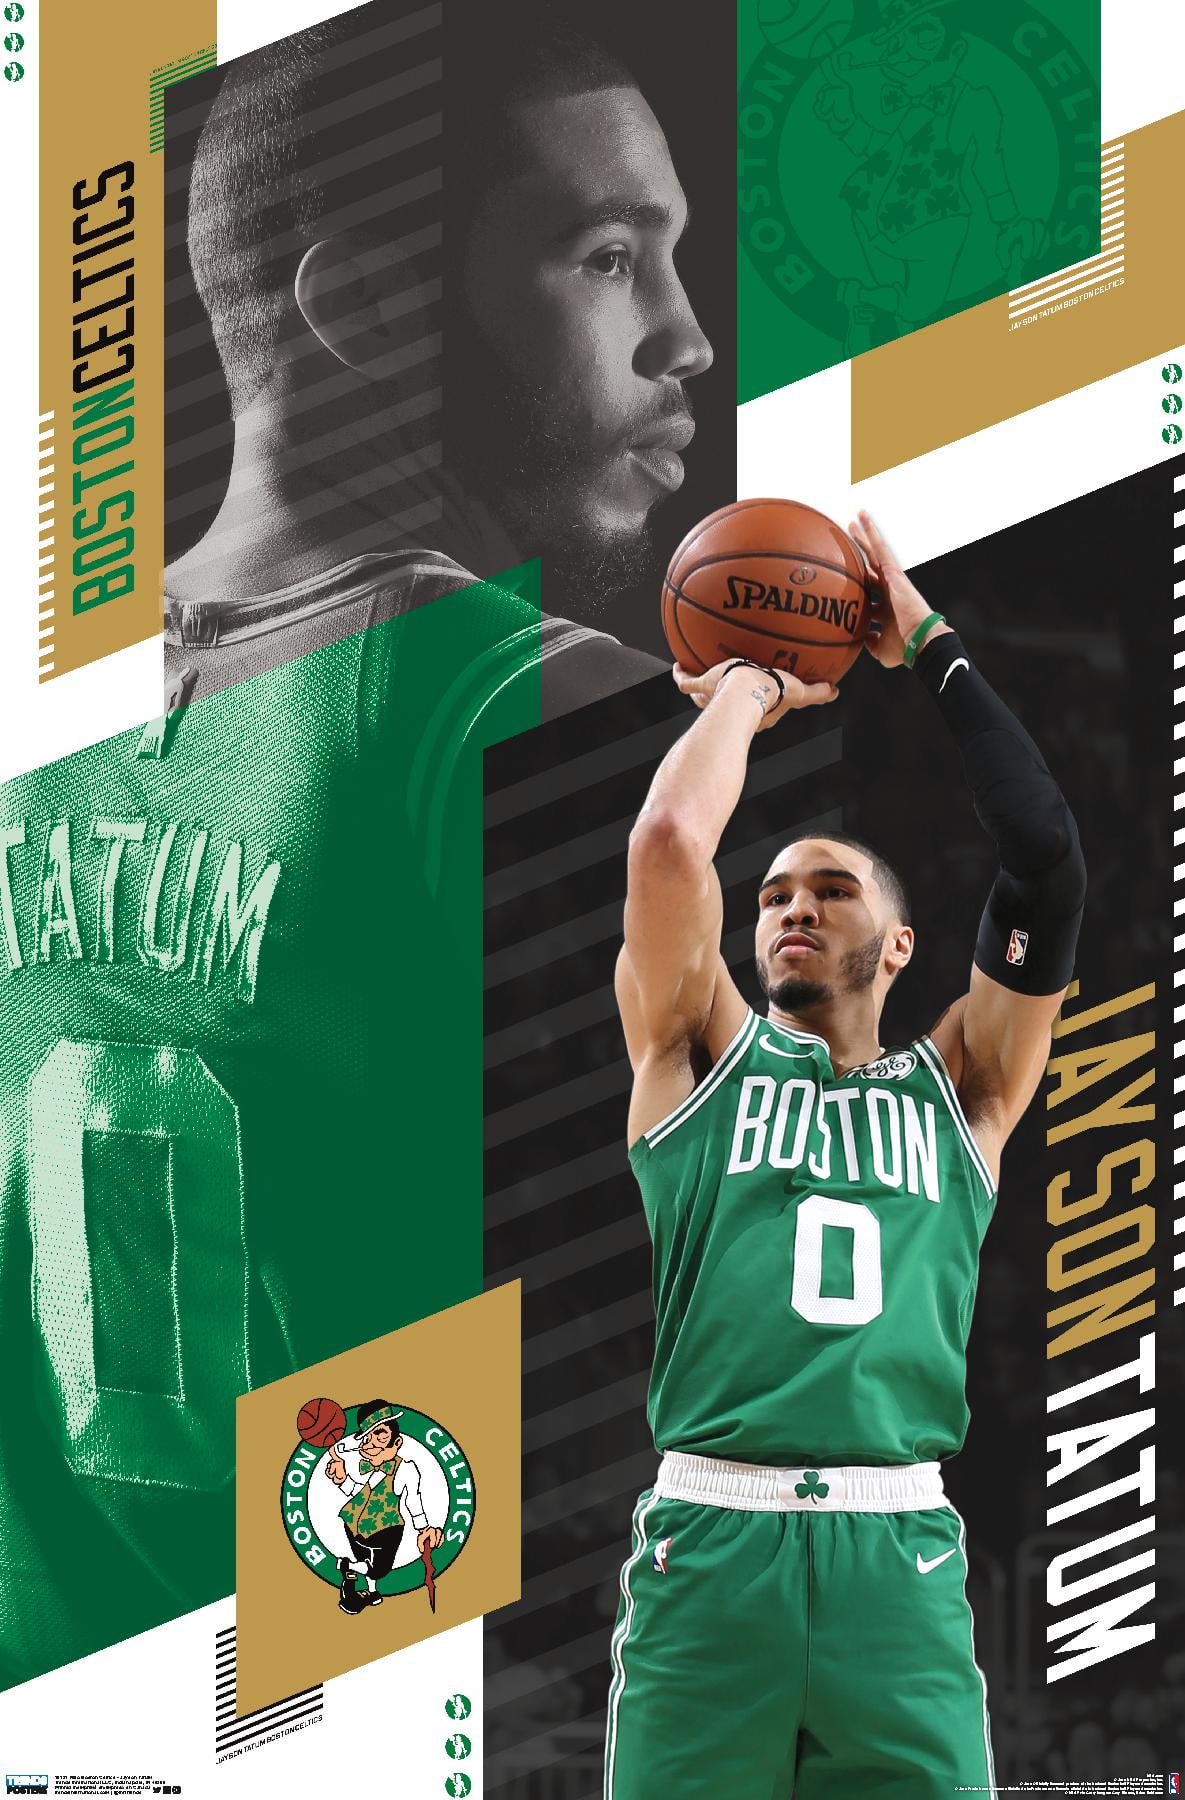 Party City Jayson Tatum Life-Size Cardboard Cutout, 6ft 8in - NBA Boston Celtics